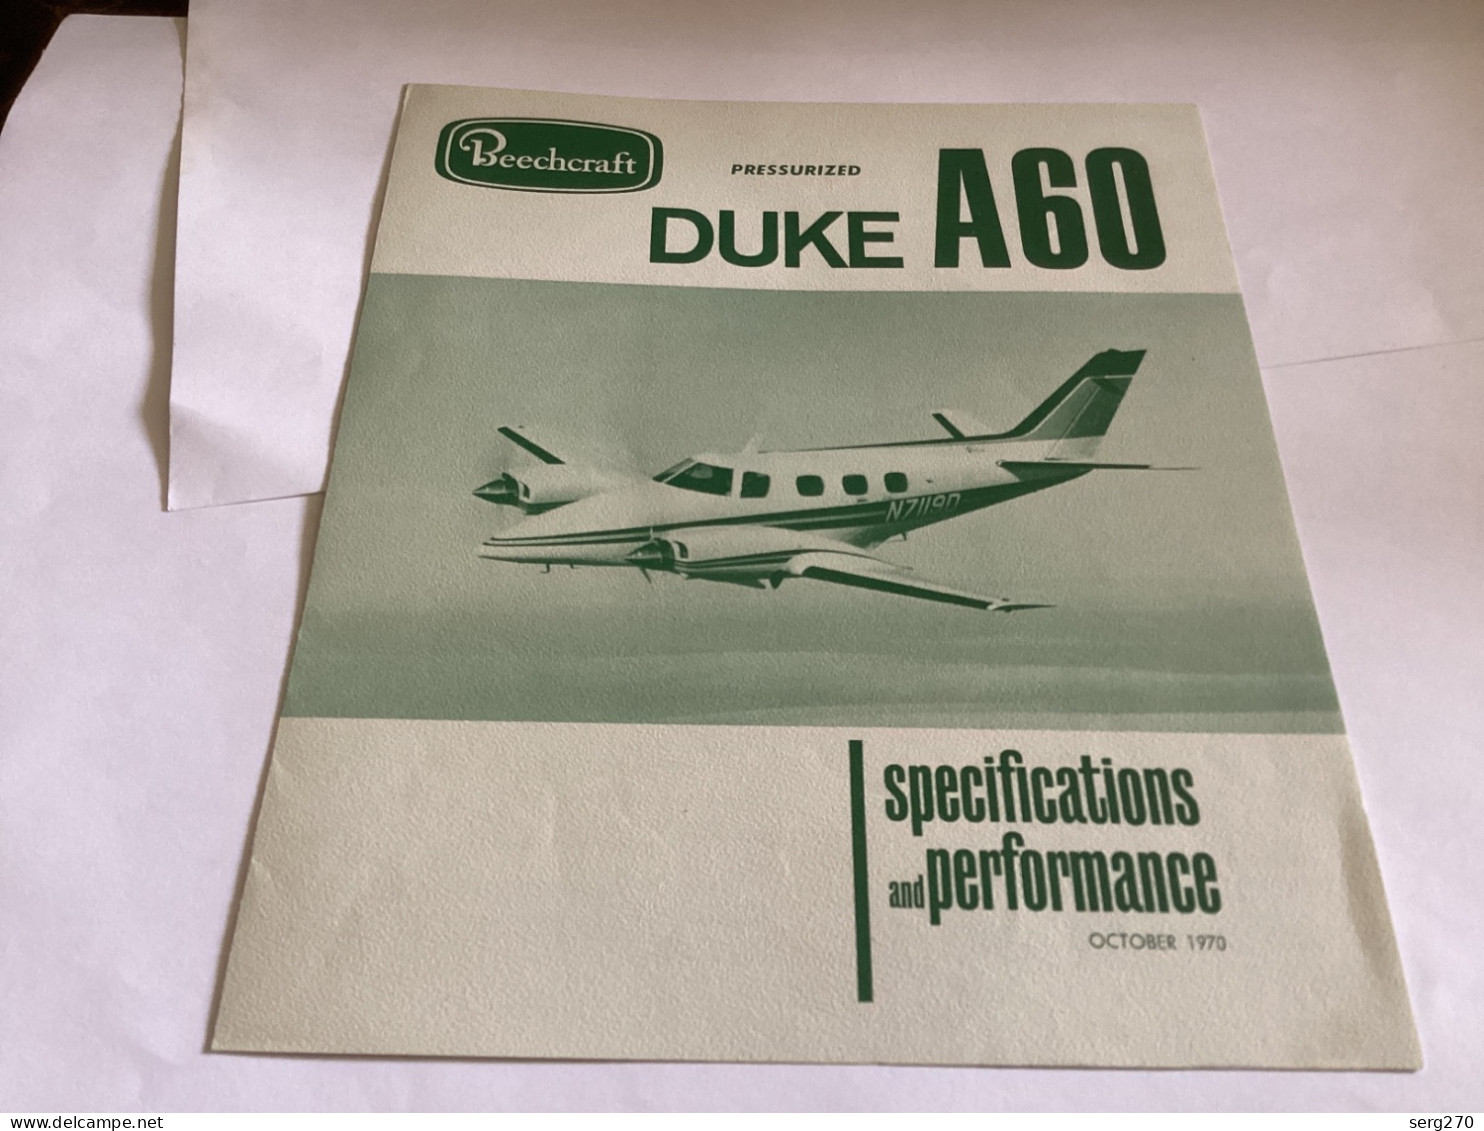 Avion Aviation Beecheraft PRESSURIZIO DUKE AGI 1970 Specifications And Performance OCTOBER 1970 - Trasporti